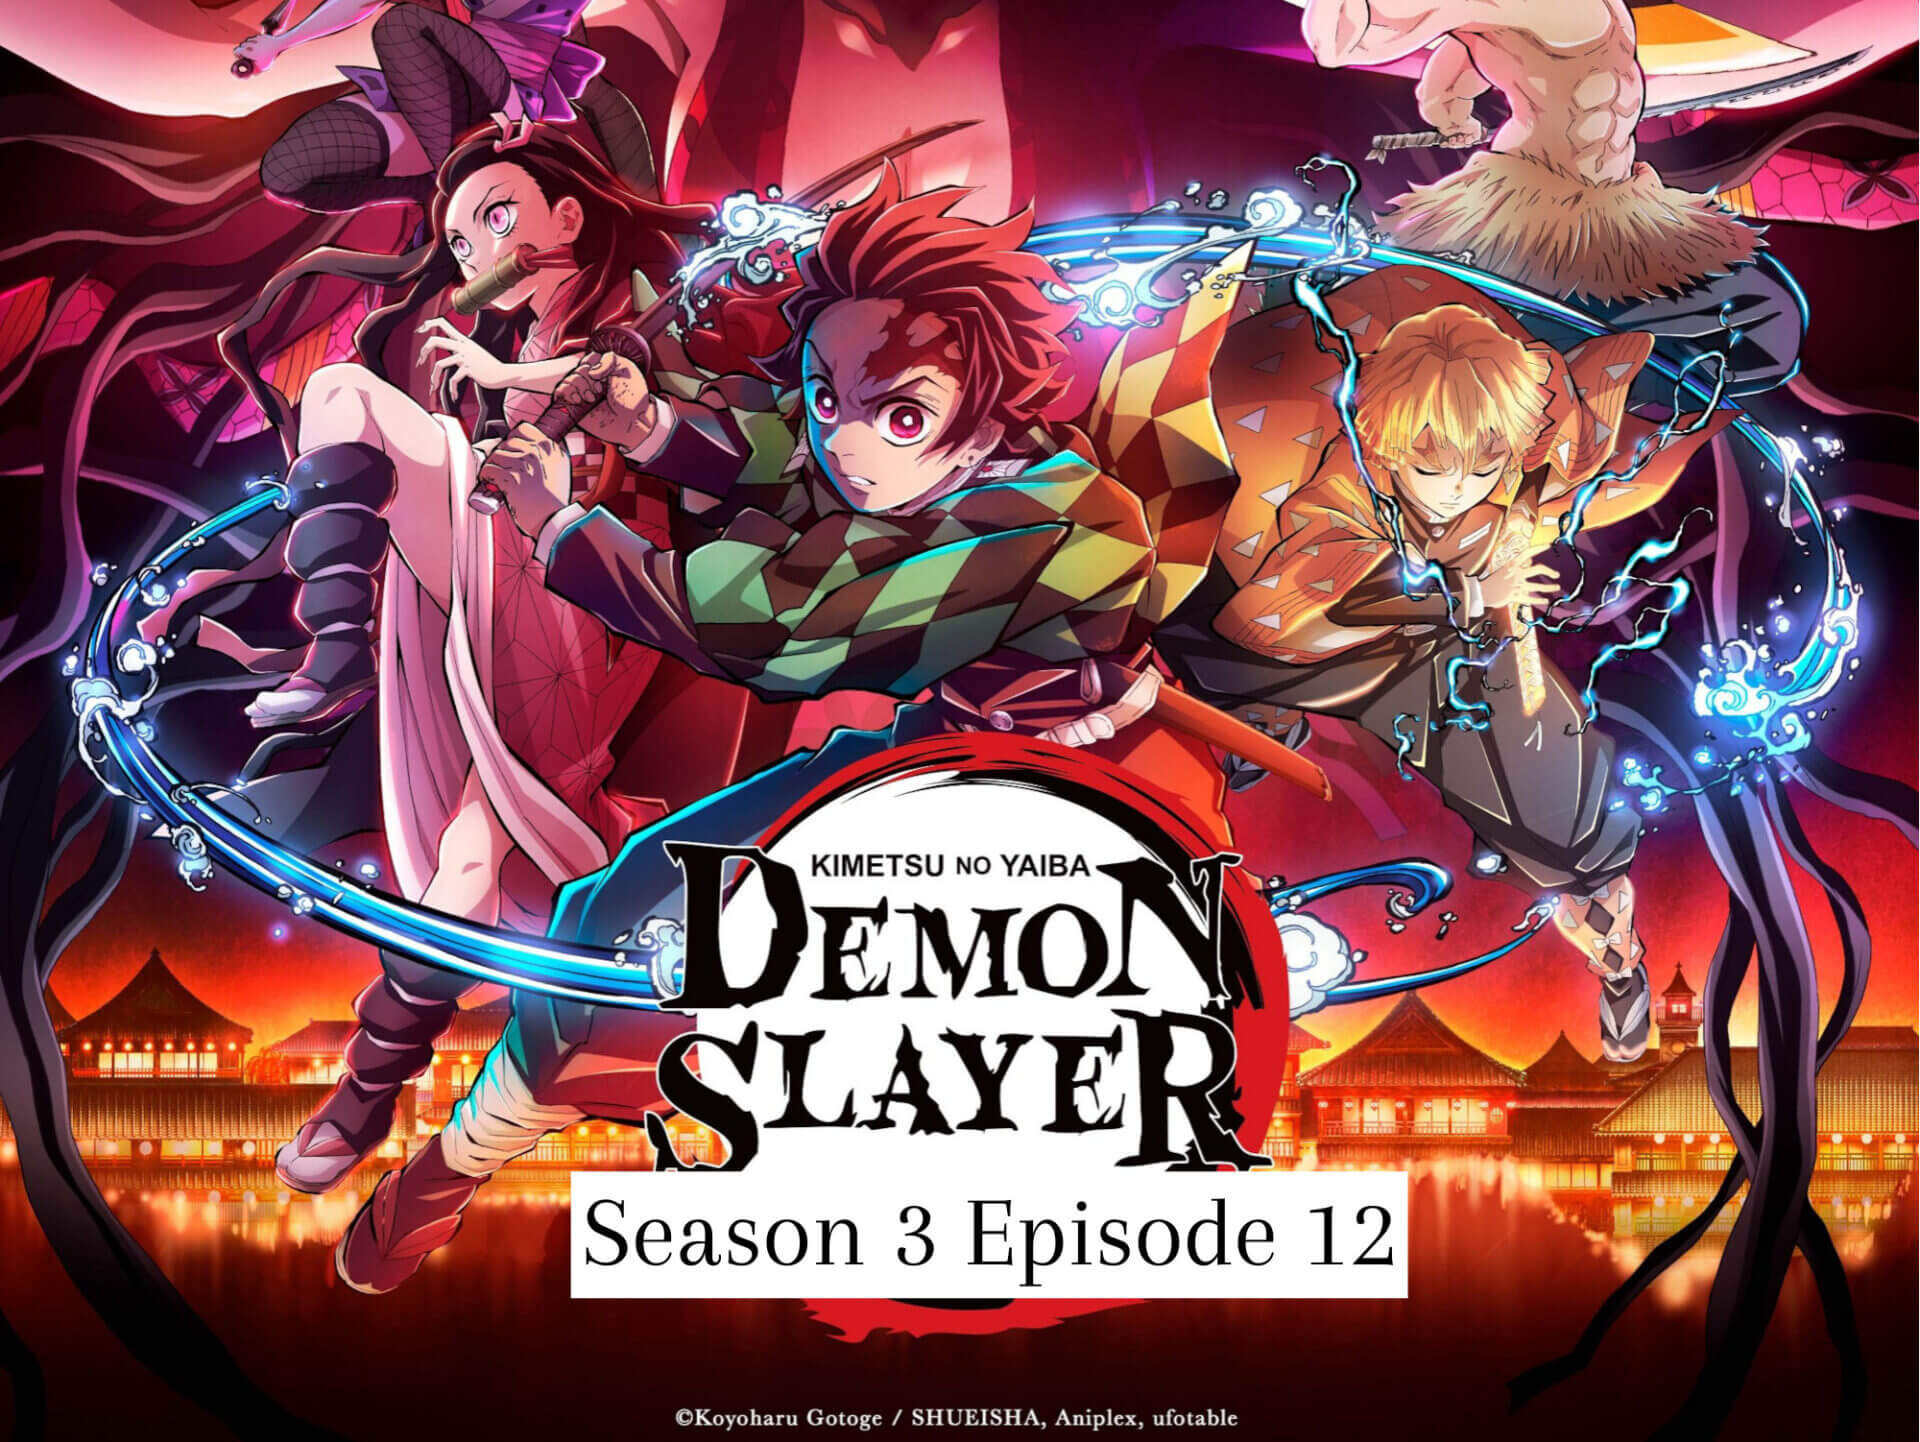 Demon Slayer Season 3 Episode 12 release date